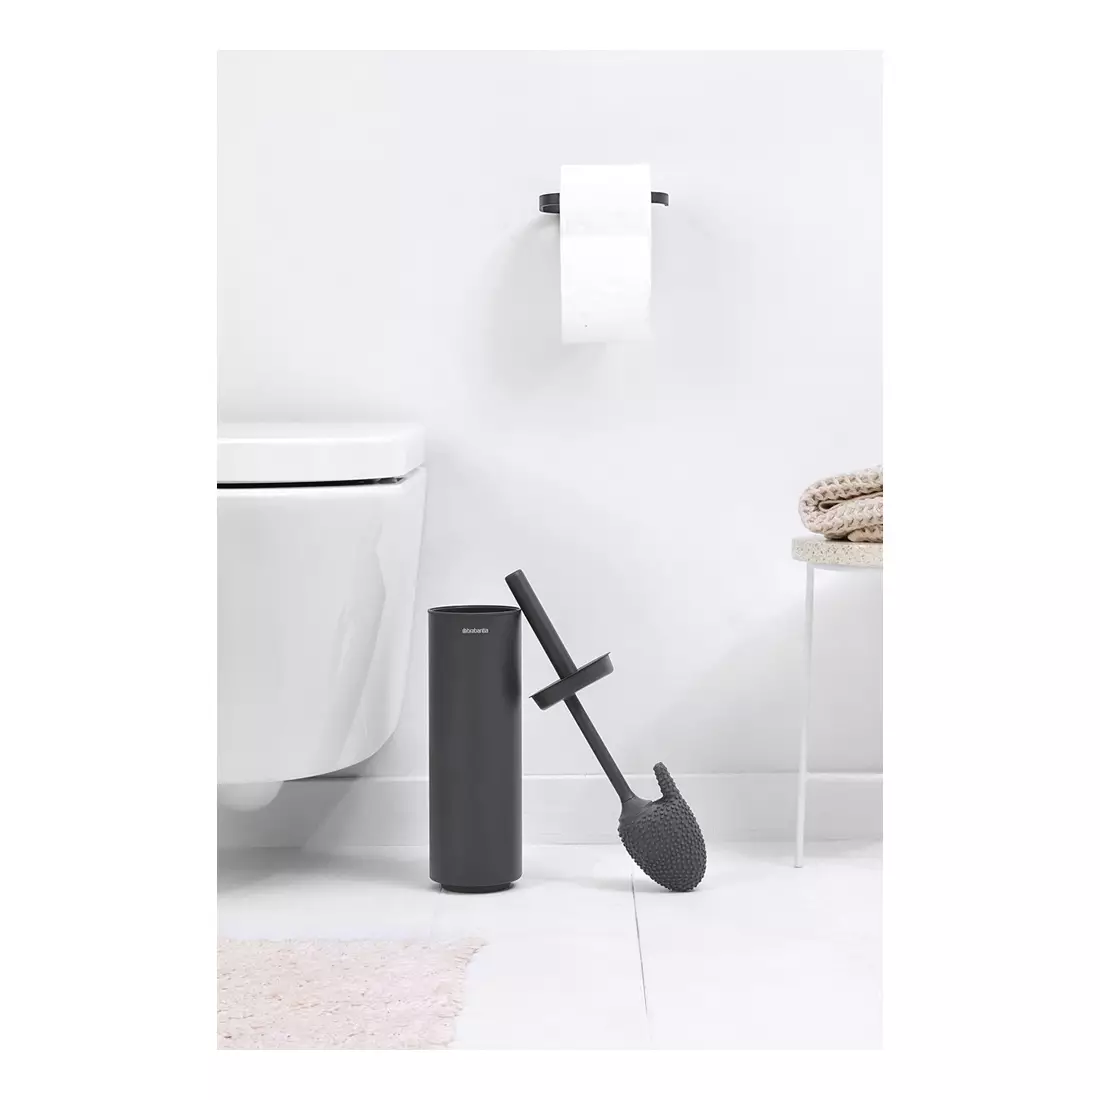 BRABANTIA MINDSET replacement toilet brush, dark gray